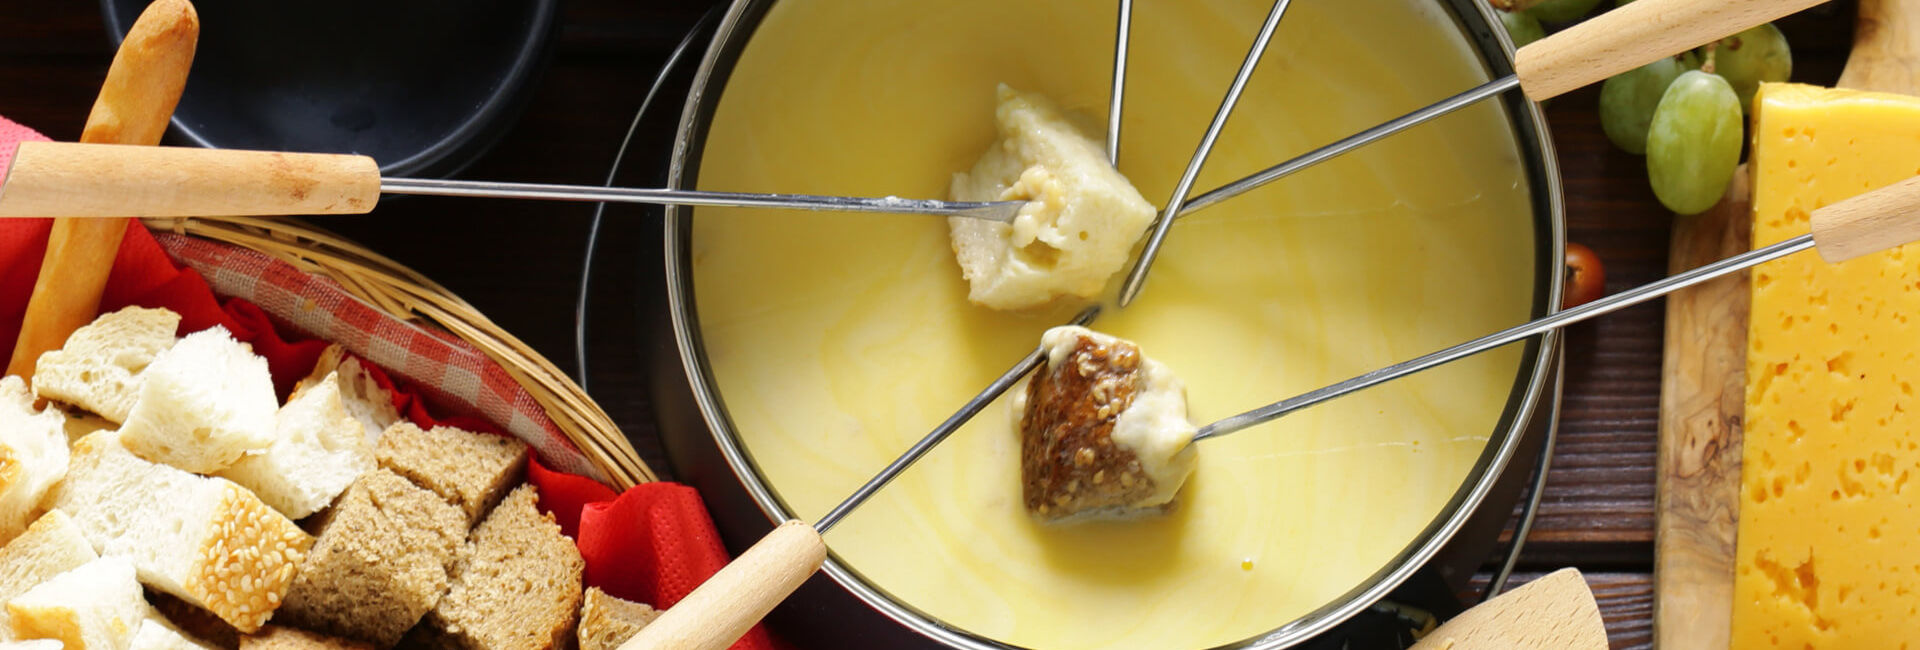 Cheese fondue with bread - Wednesday Night Fever Package Gasterij 't Karrewiel